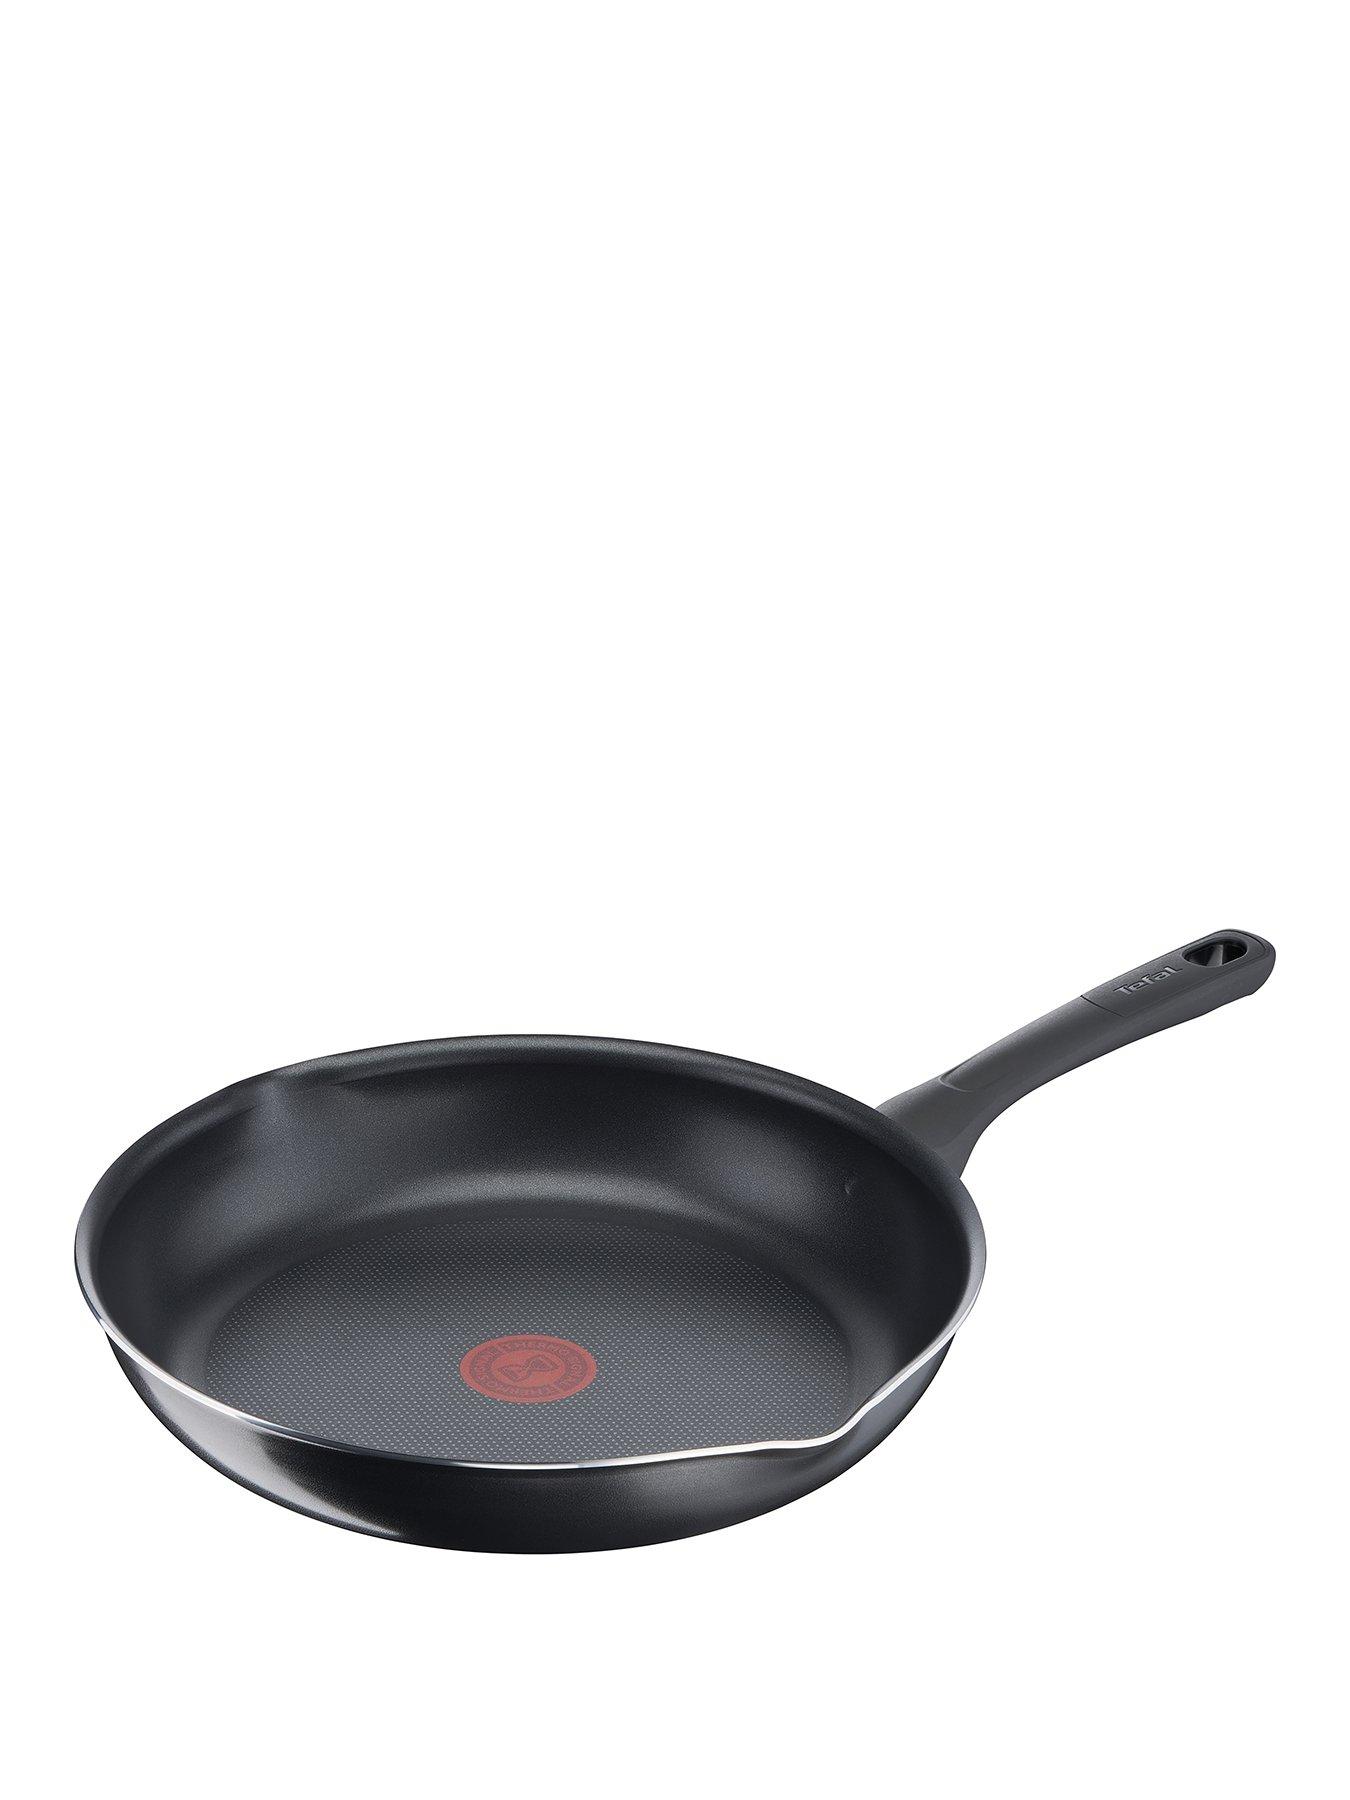 Tefal, Pots & Frying Pans, Induction, Cookware